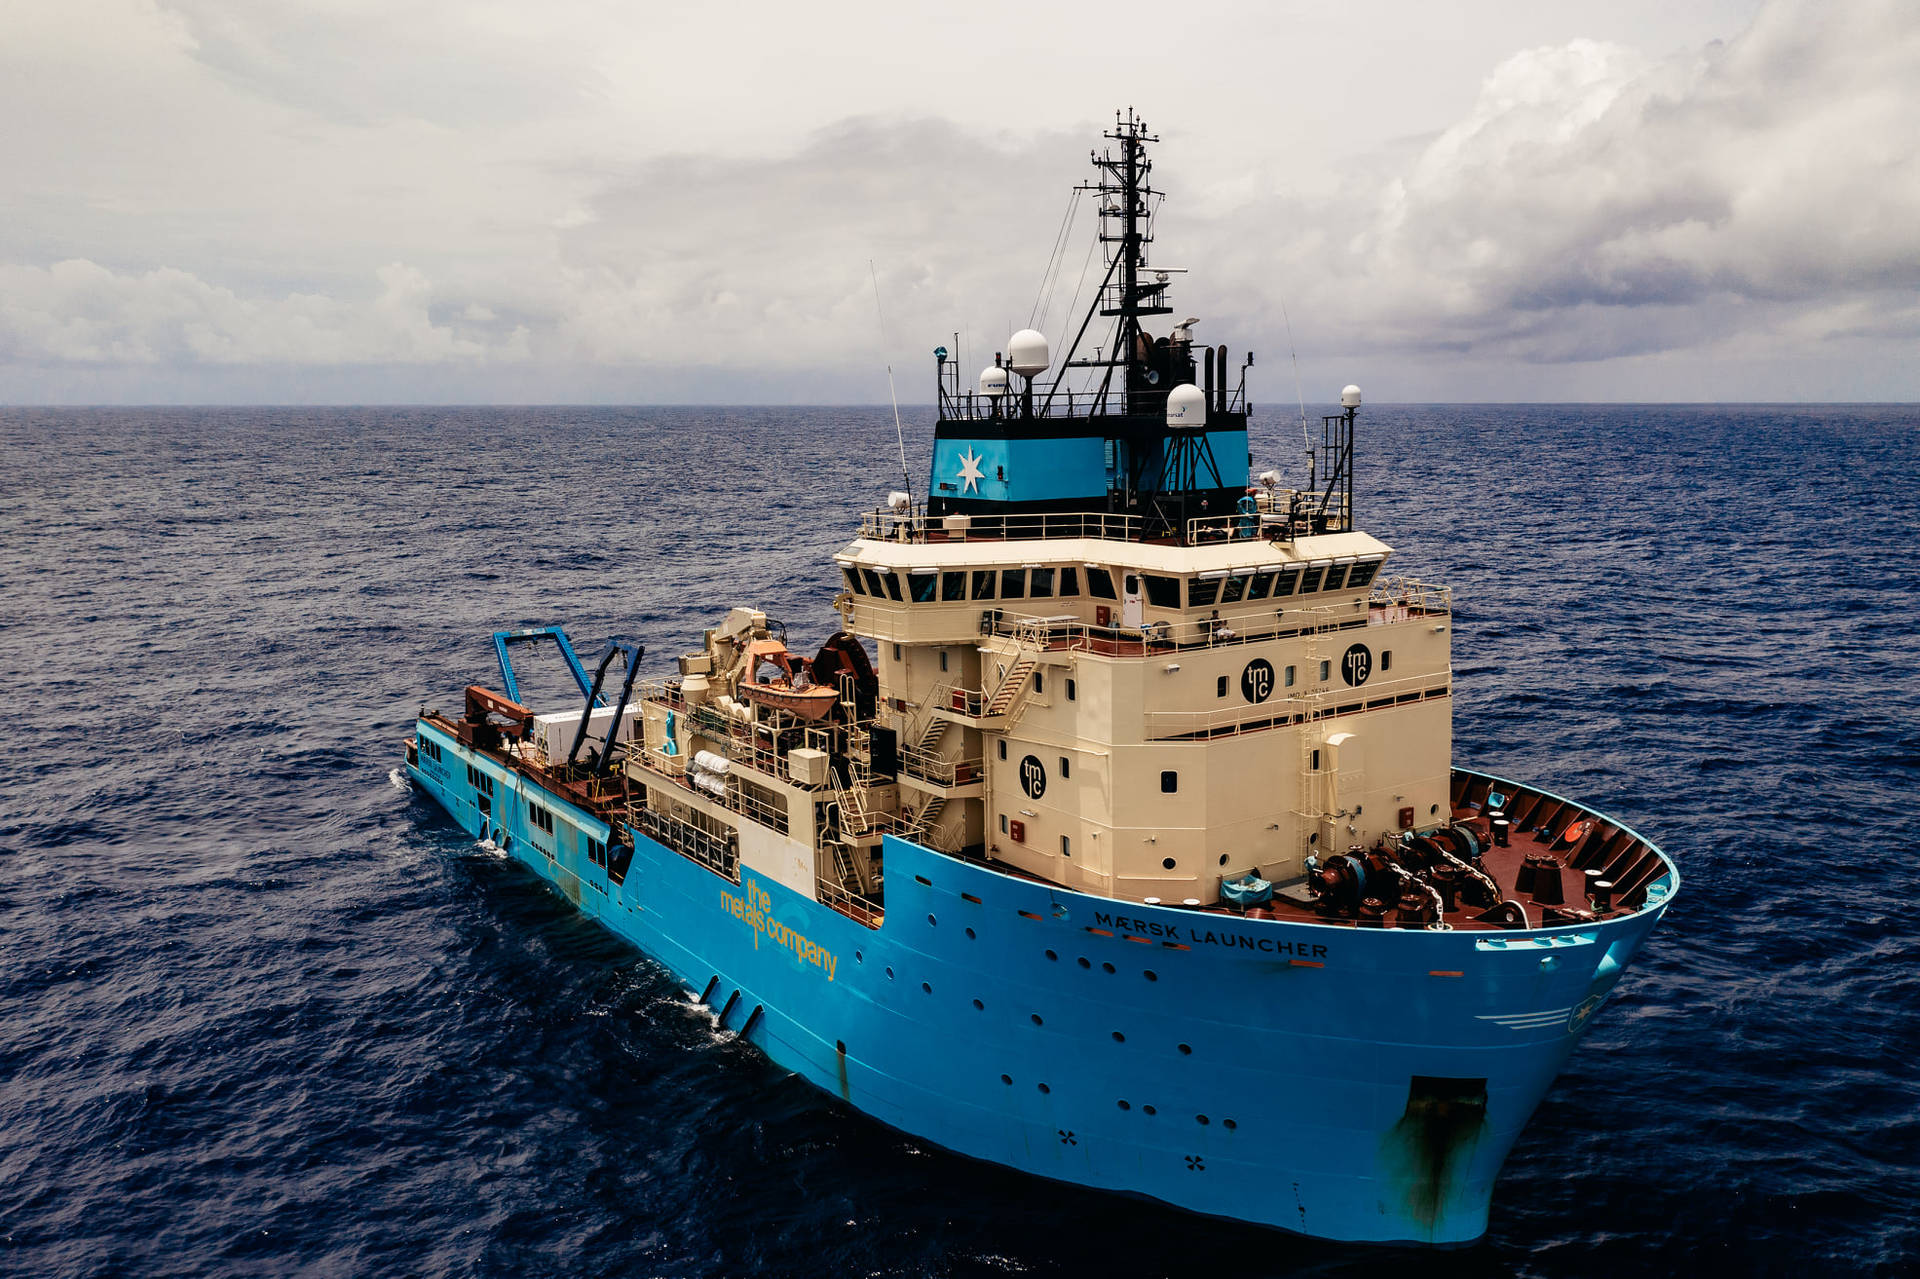 Naurulauncher Segelt Auf Dem Meer Wallpaper